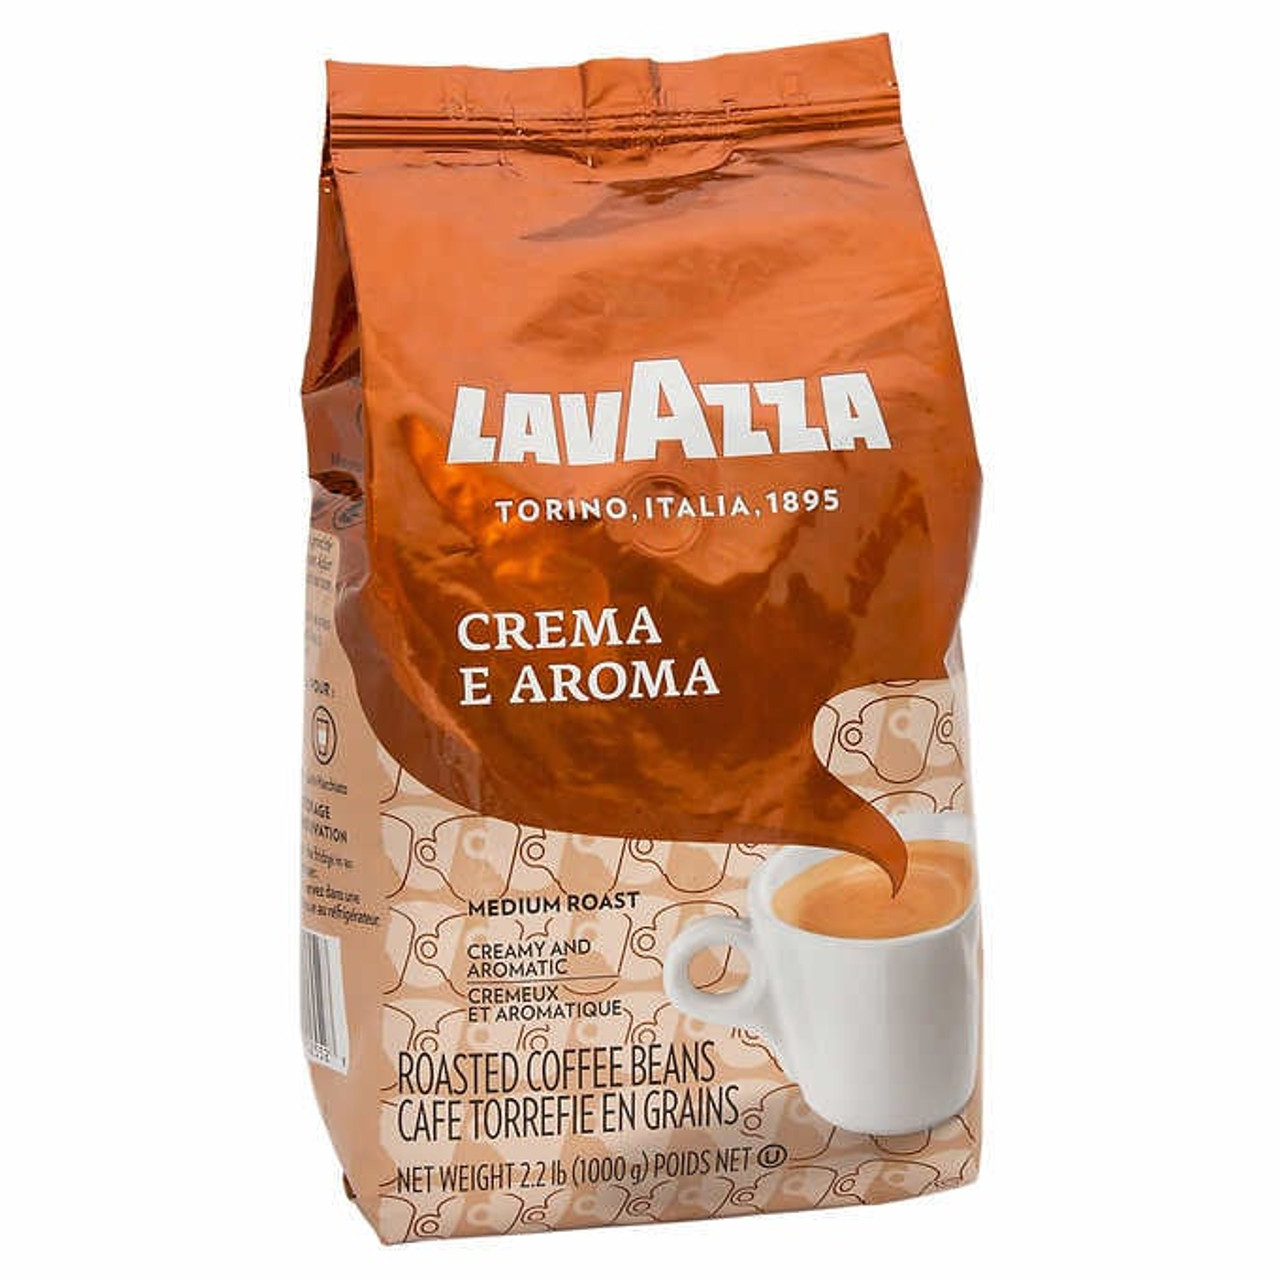 Lavazza Crema E Aroma Coffee - 1 kg - Rich and Aromatic Coffee Bliss
- Chicken Pieces